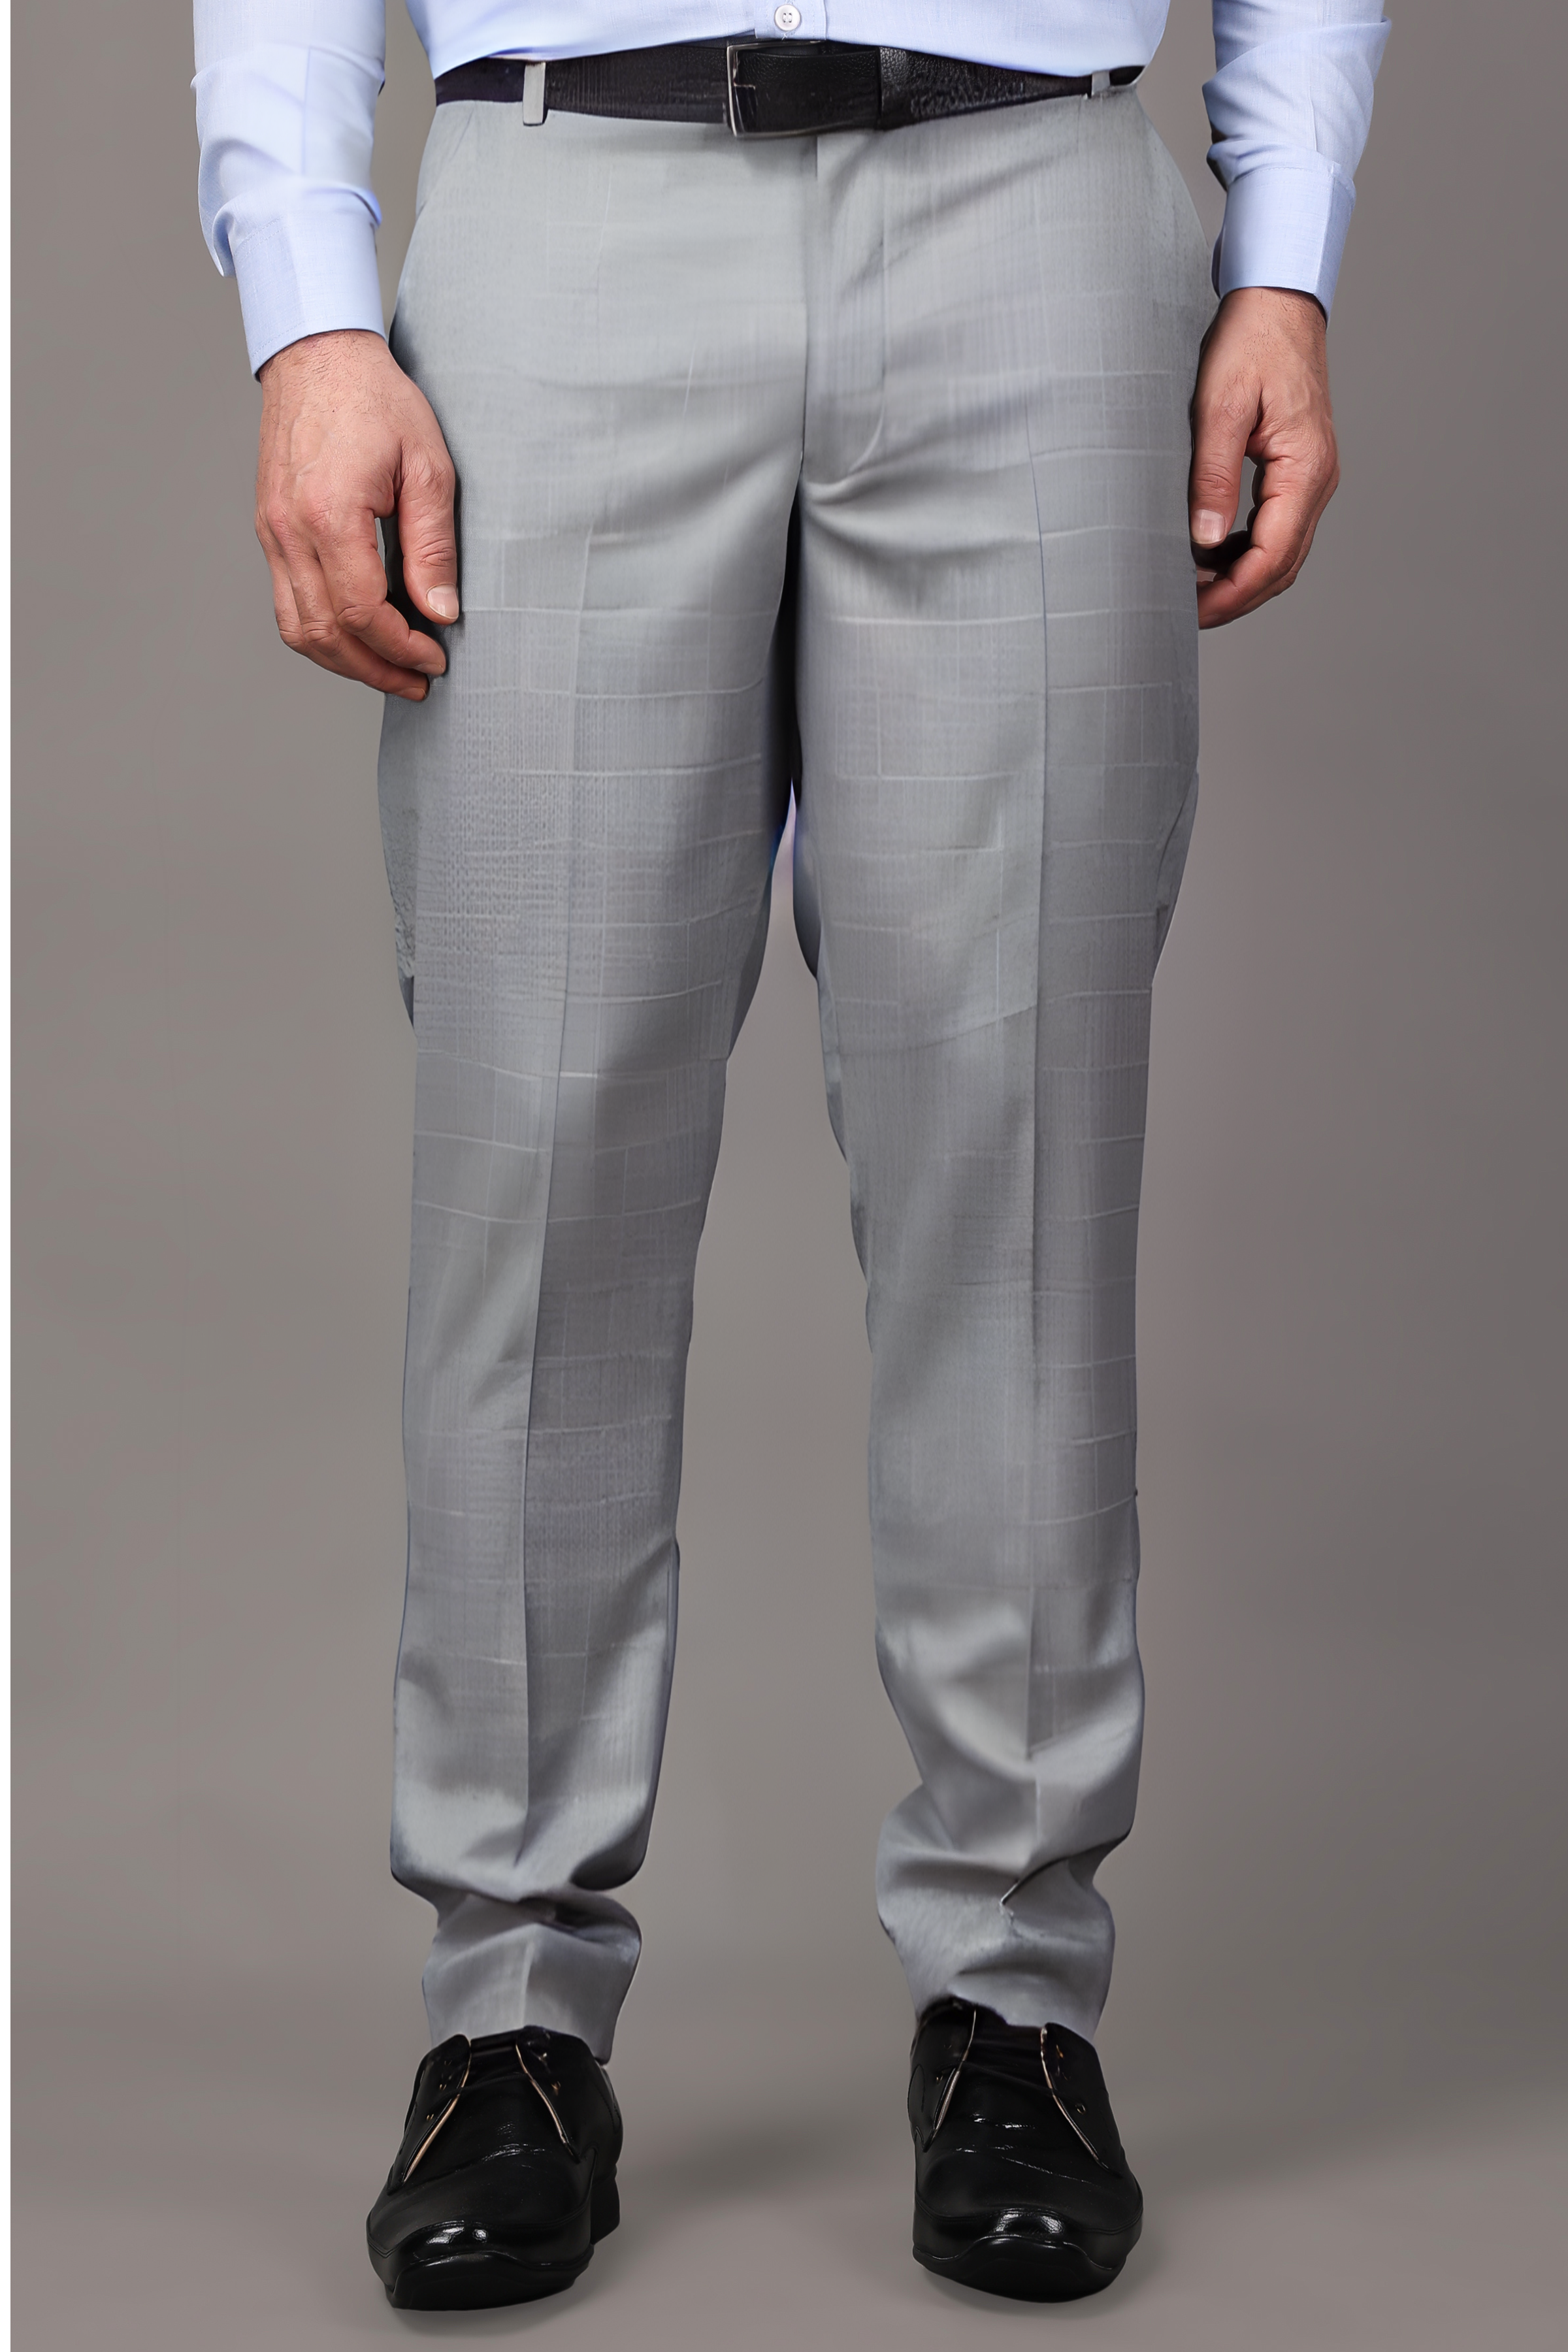 Men's Dress Pants | Slim Fit & Modern Fit Pants